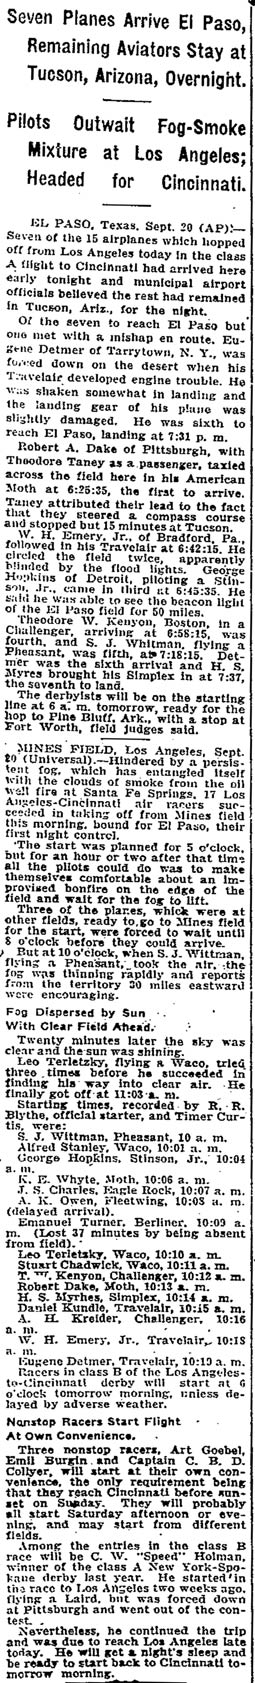 Salt Lake City (UT) Tribune, September 21, 1928 (Source: Woodling)